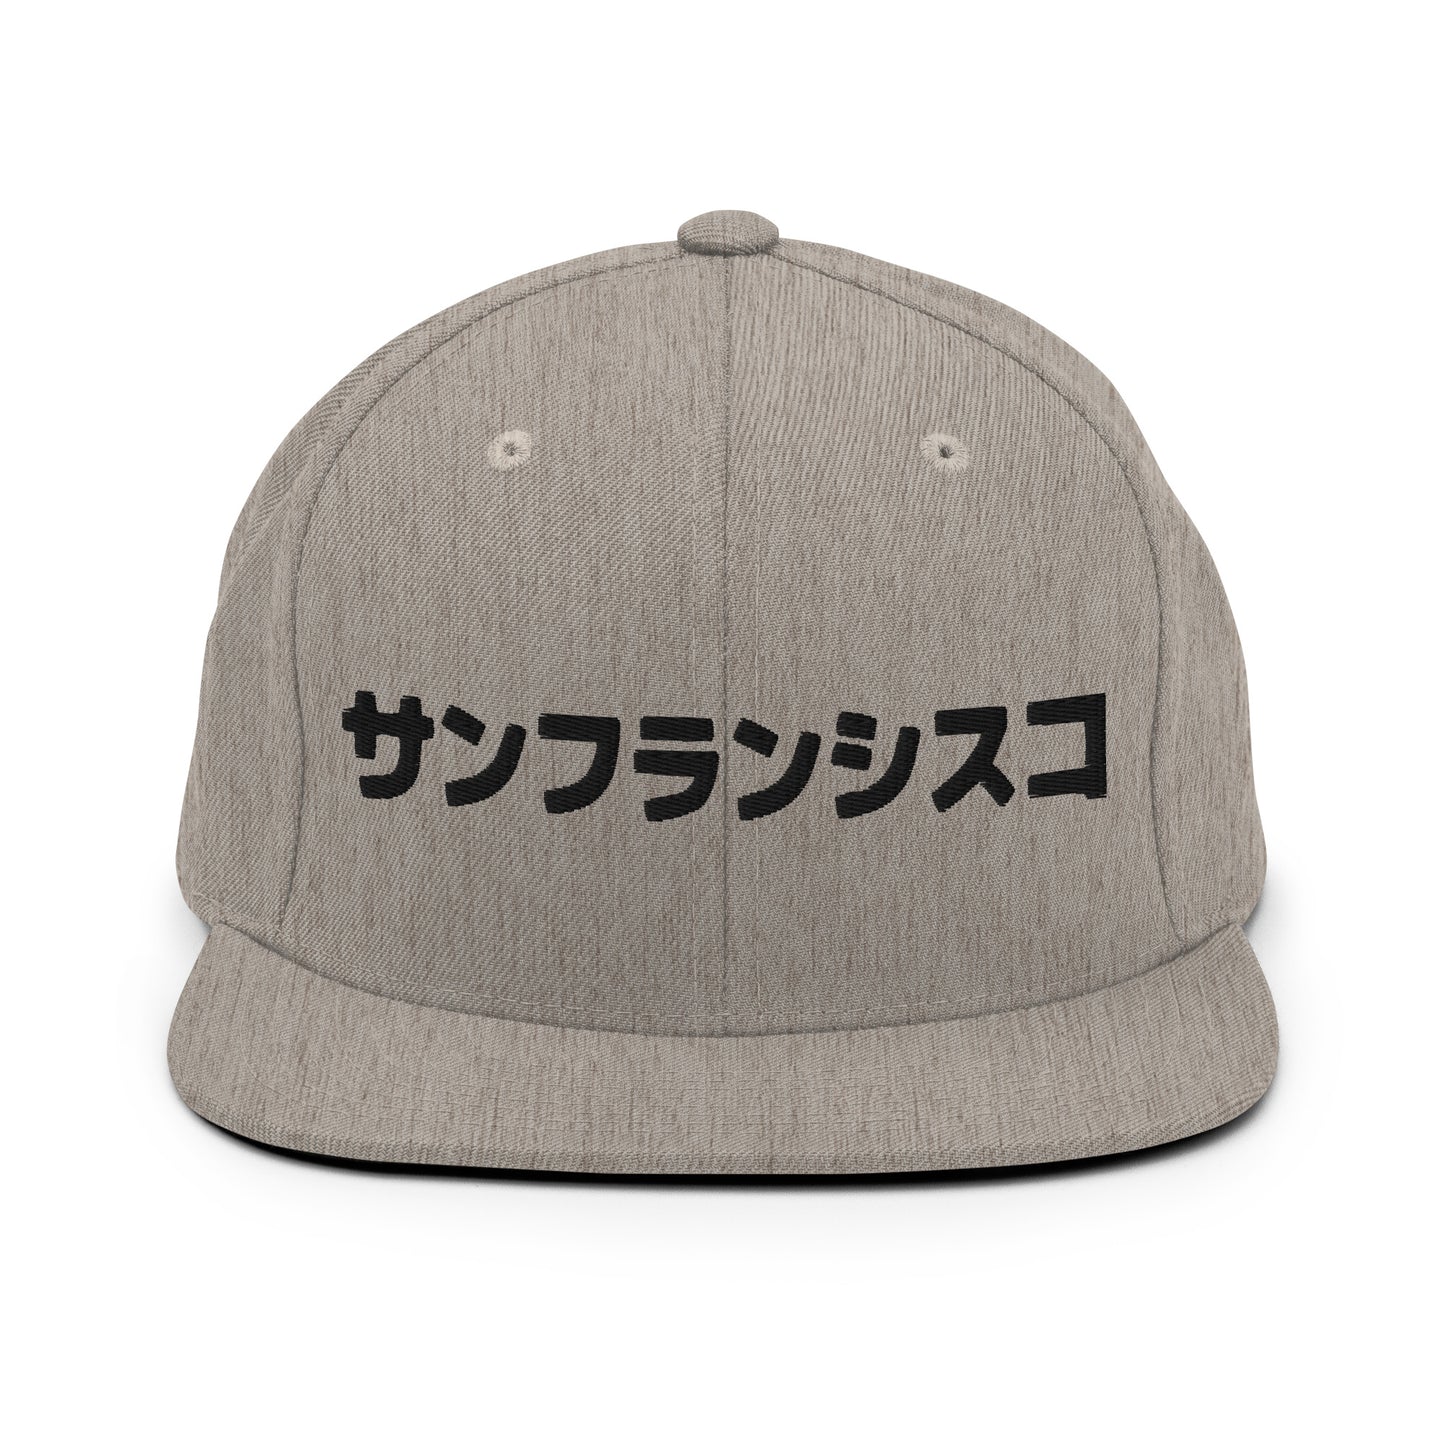 San Francisco Japanese Hat